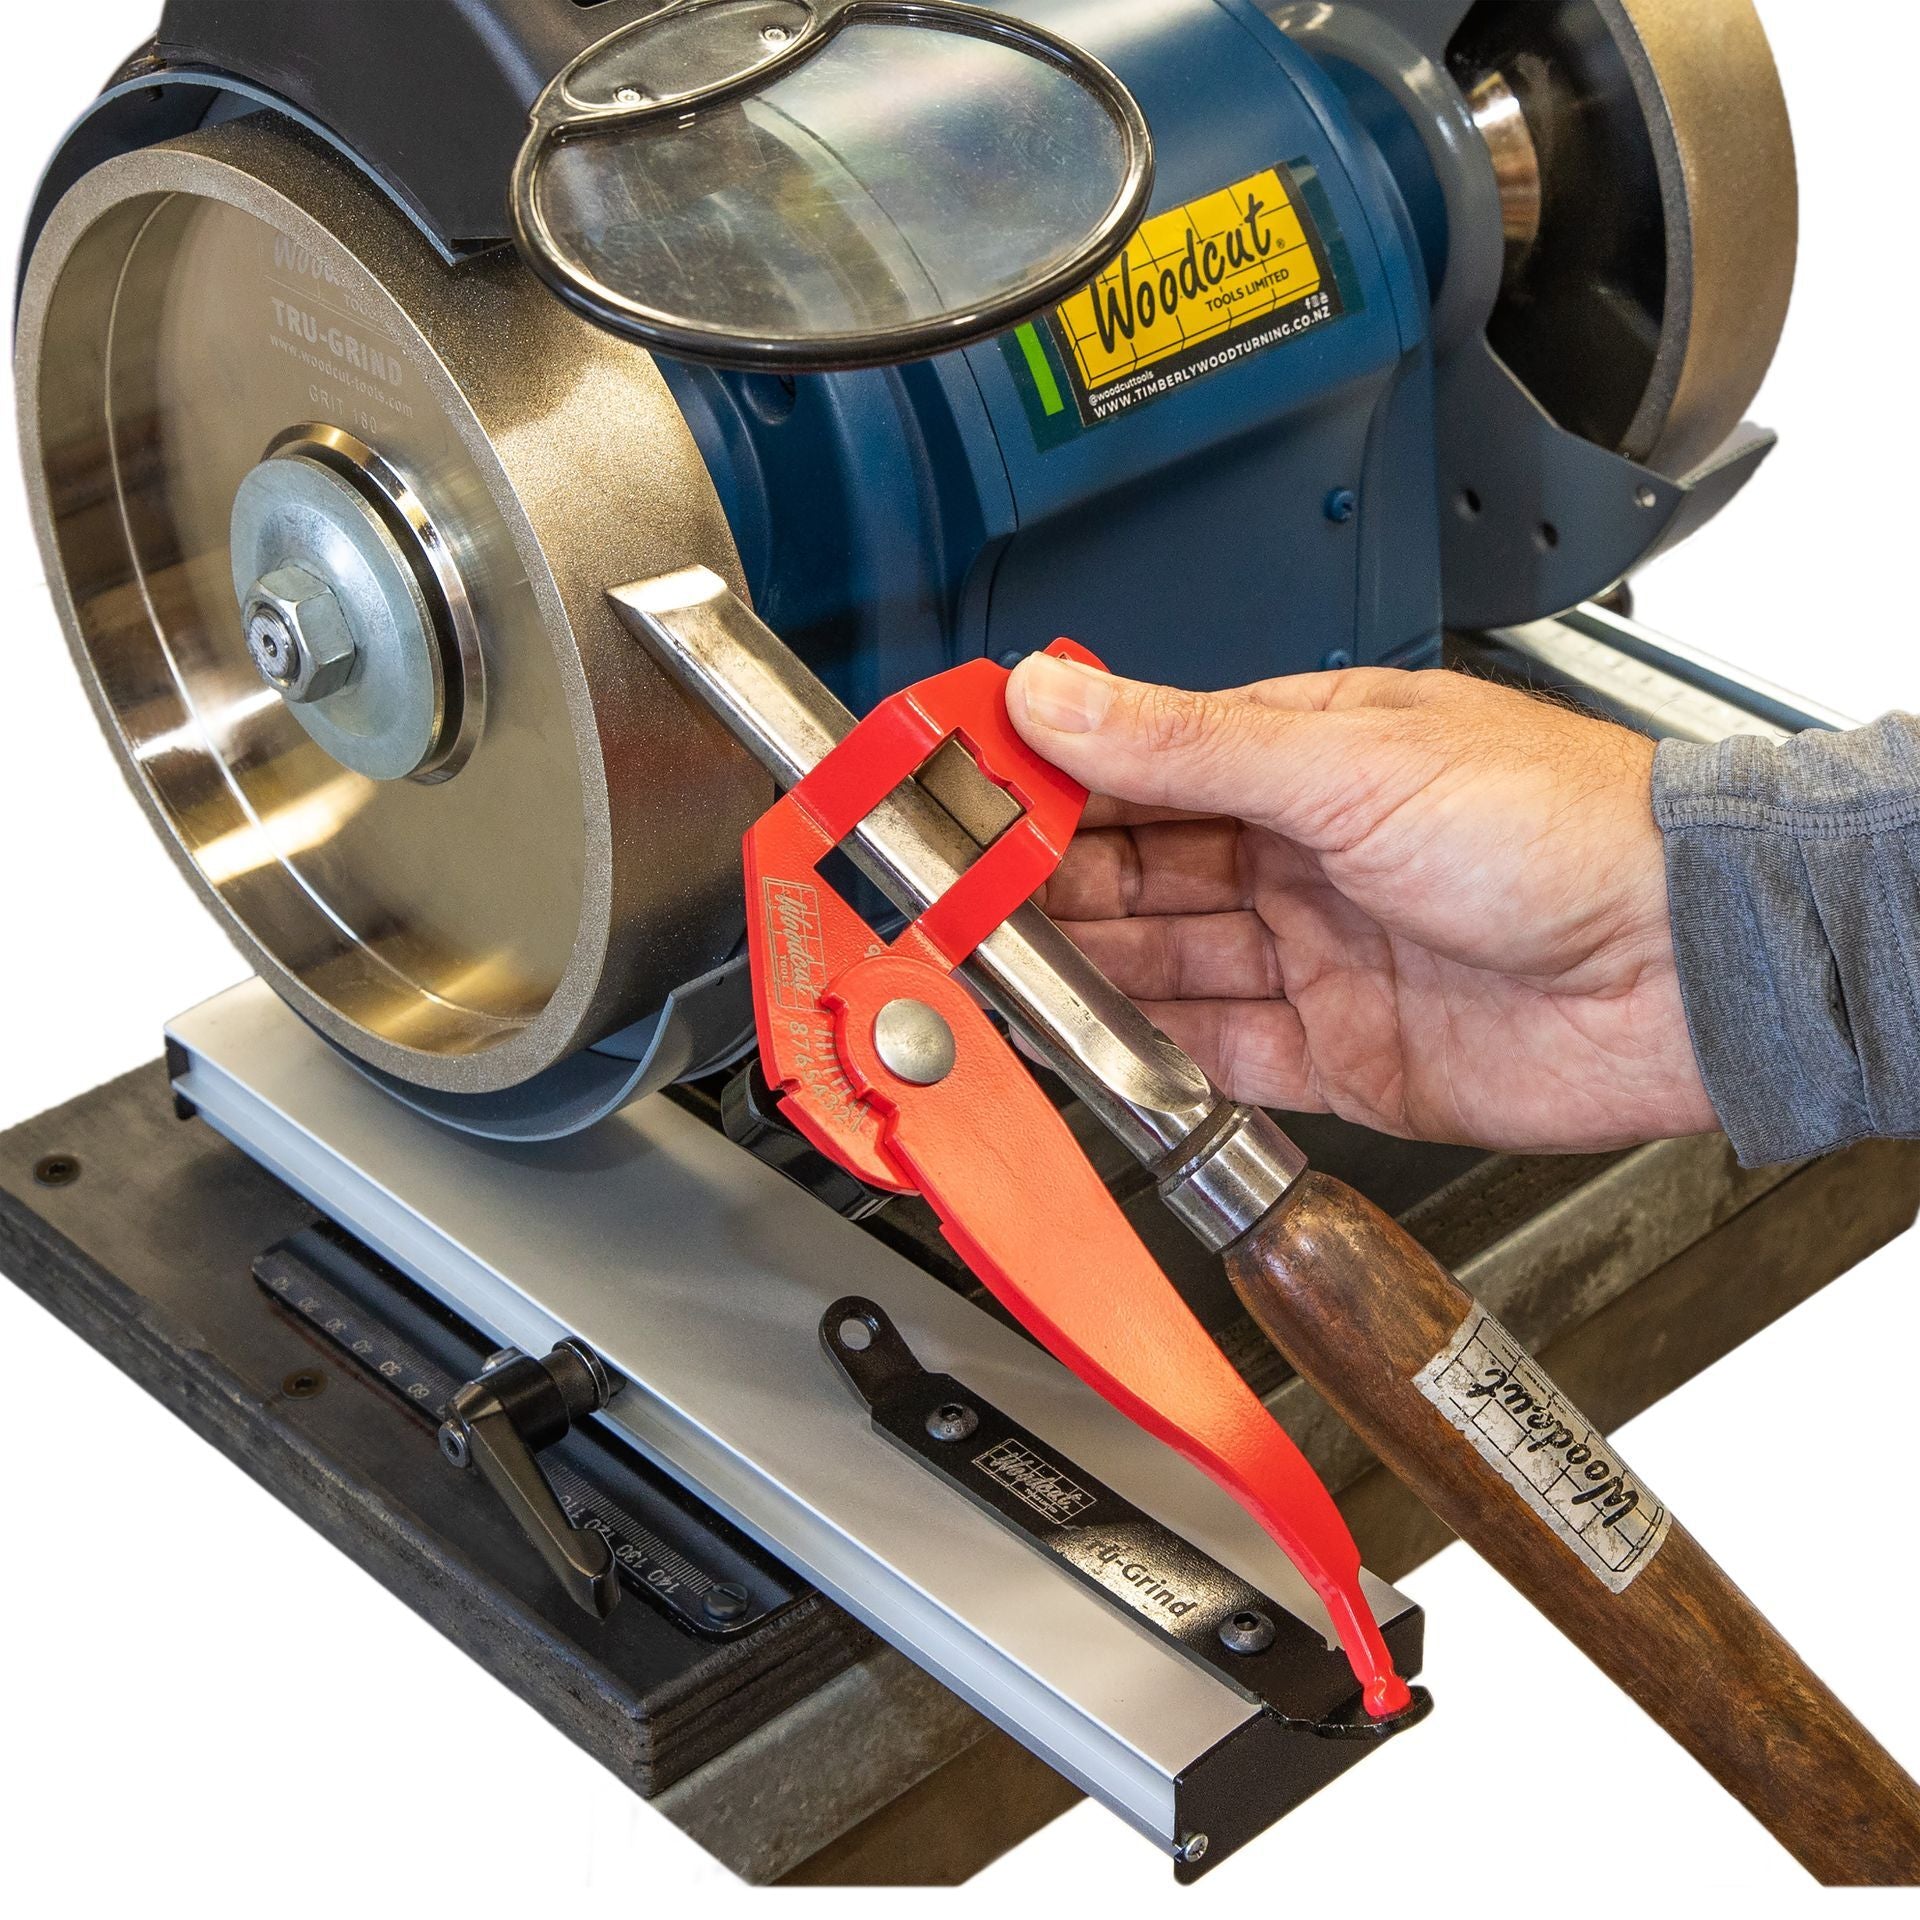 Tru-Grind Premium Sharpening System TRUGR 23 by Woodcut Tools